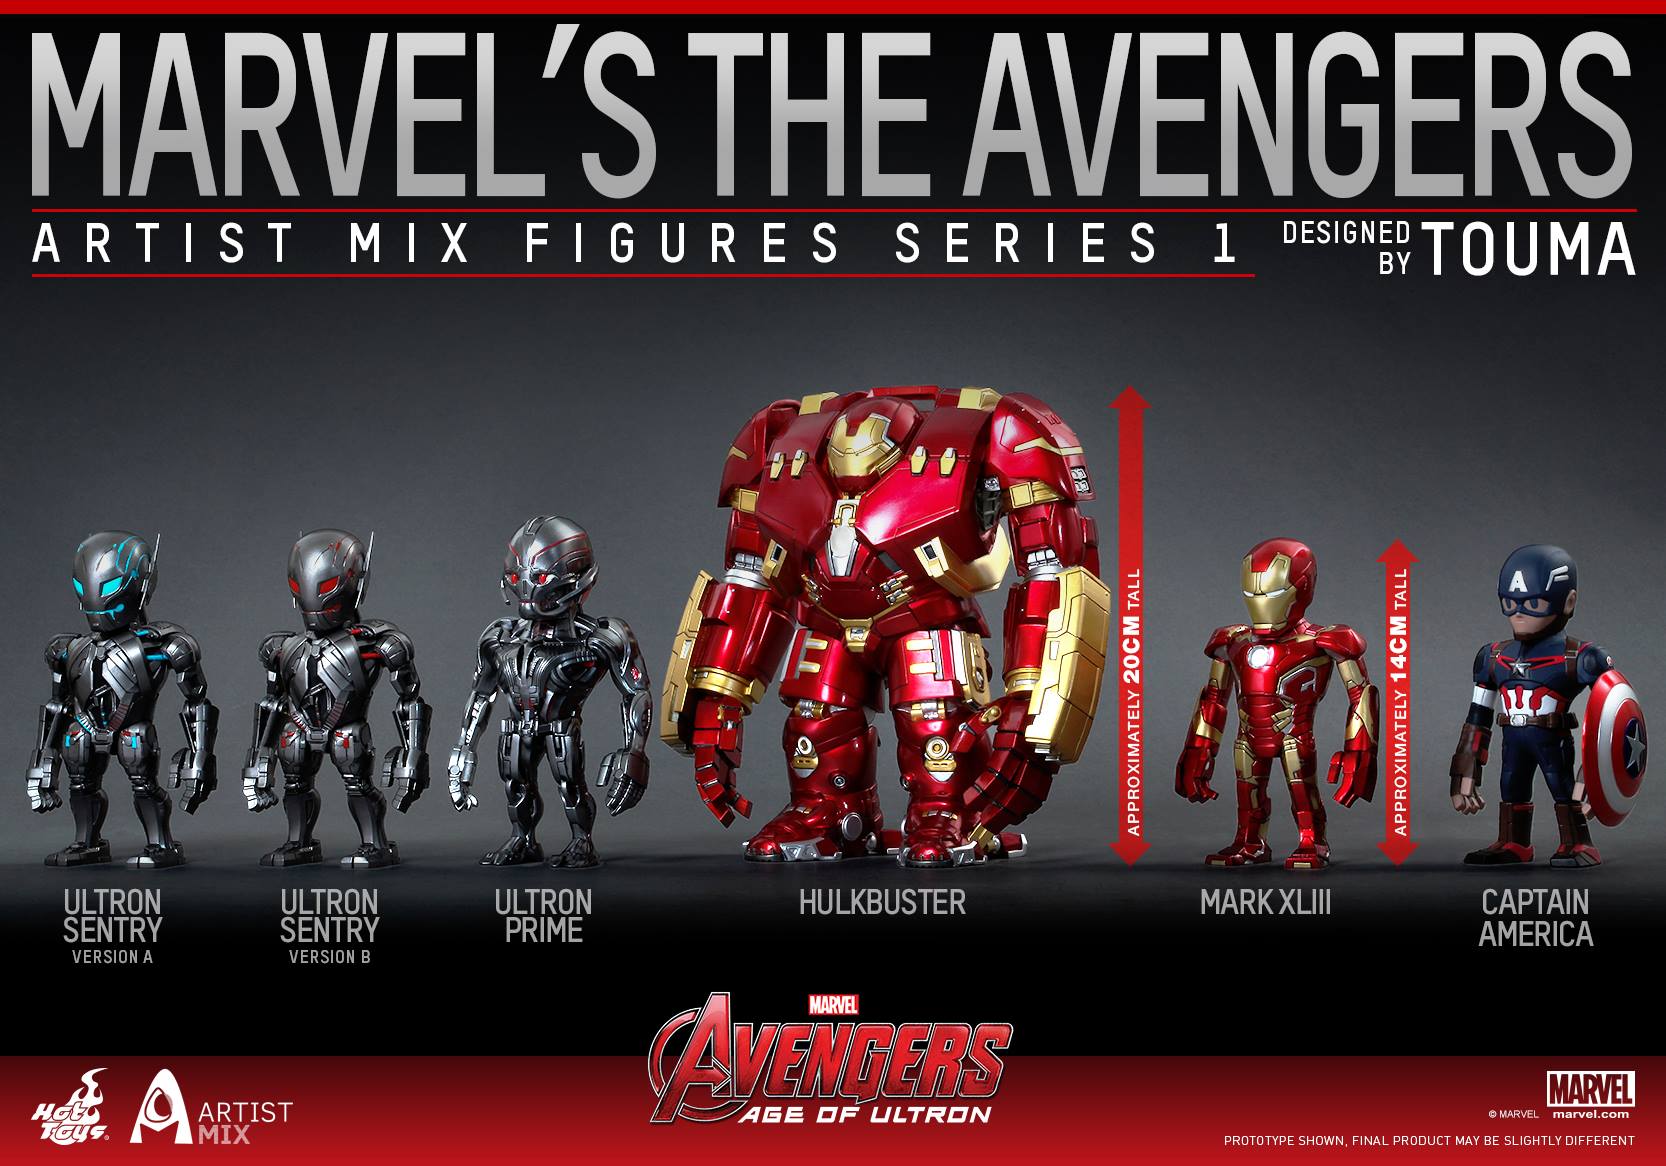 Avengers: Age of Ultron Artist Mix Figures